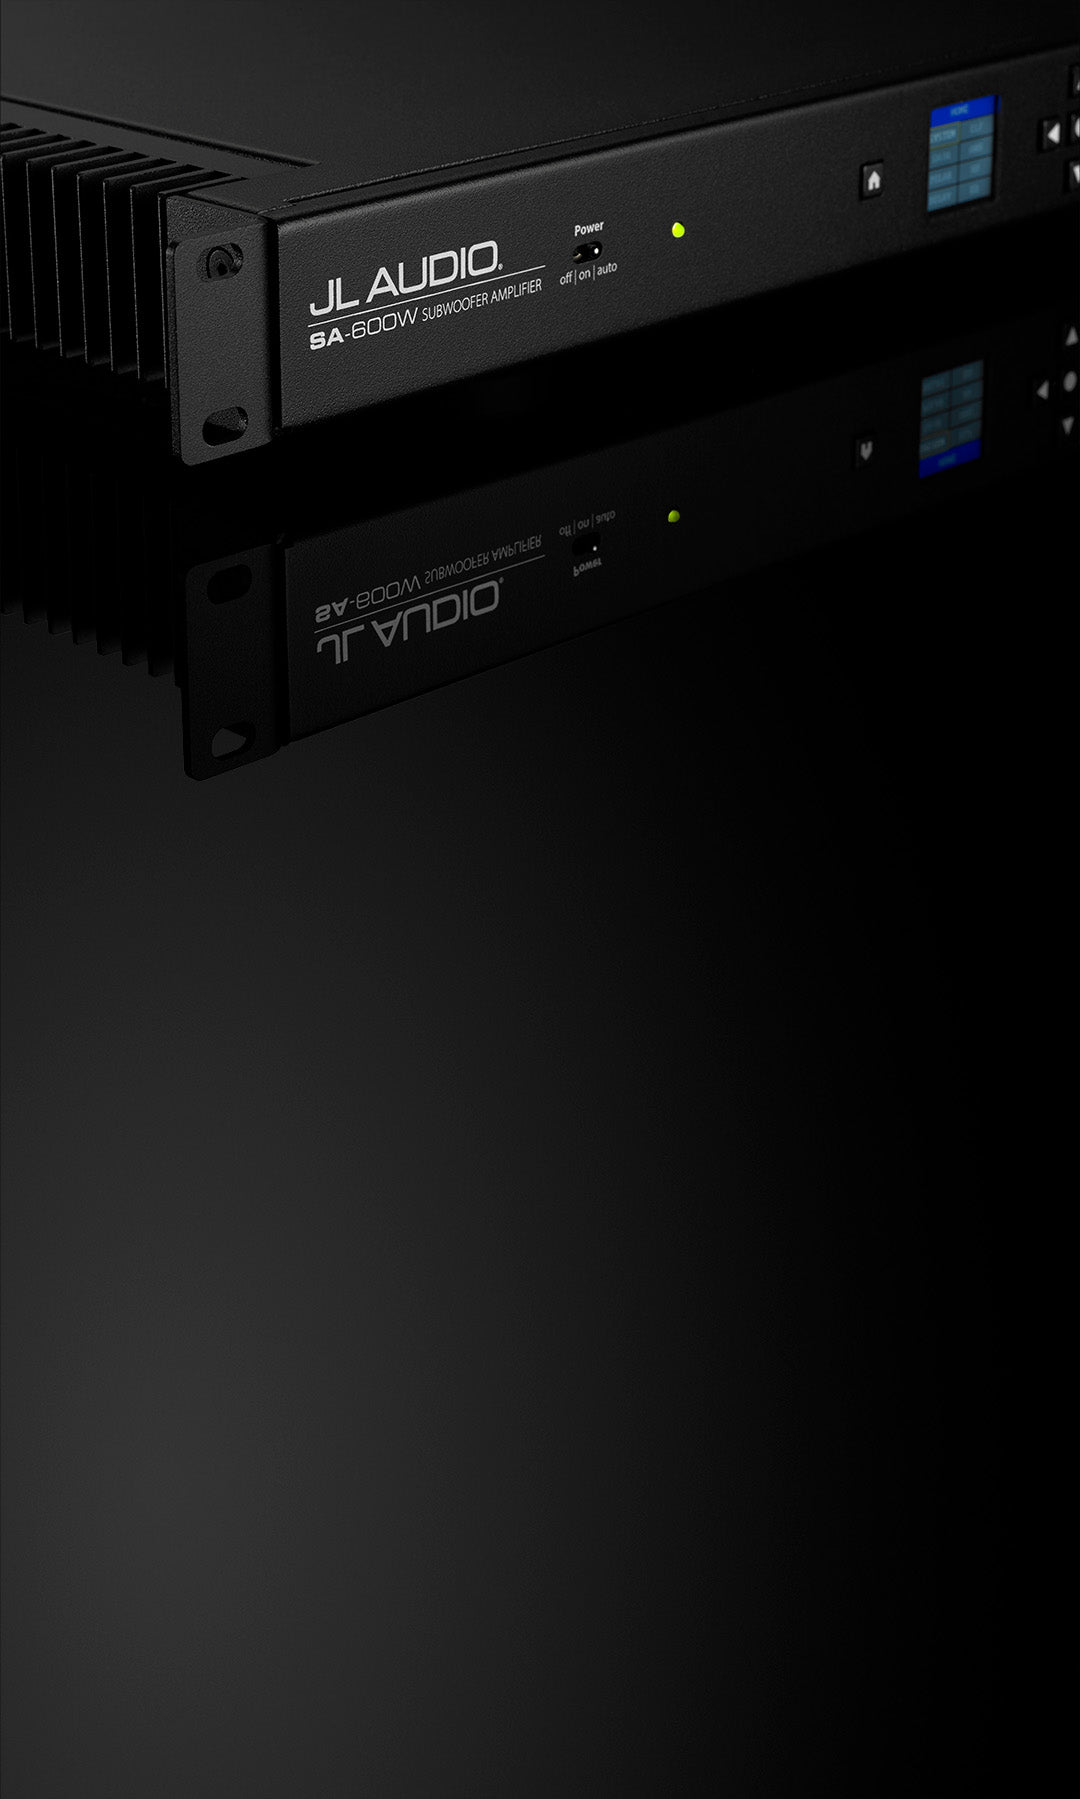 Angled view of SA-600w Amplifier in dark sleek setting.